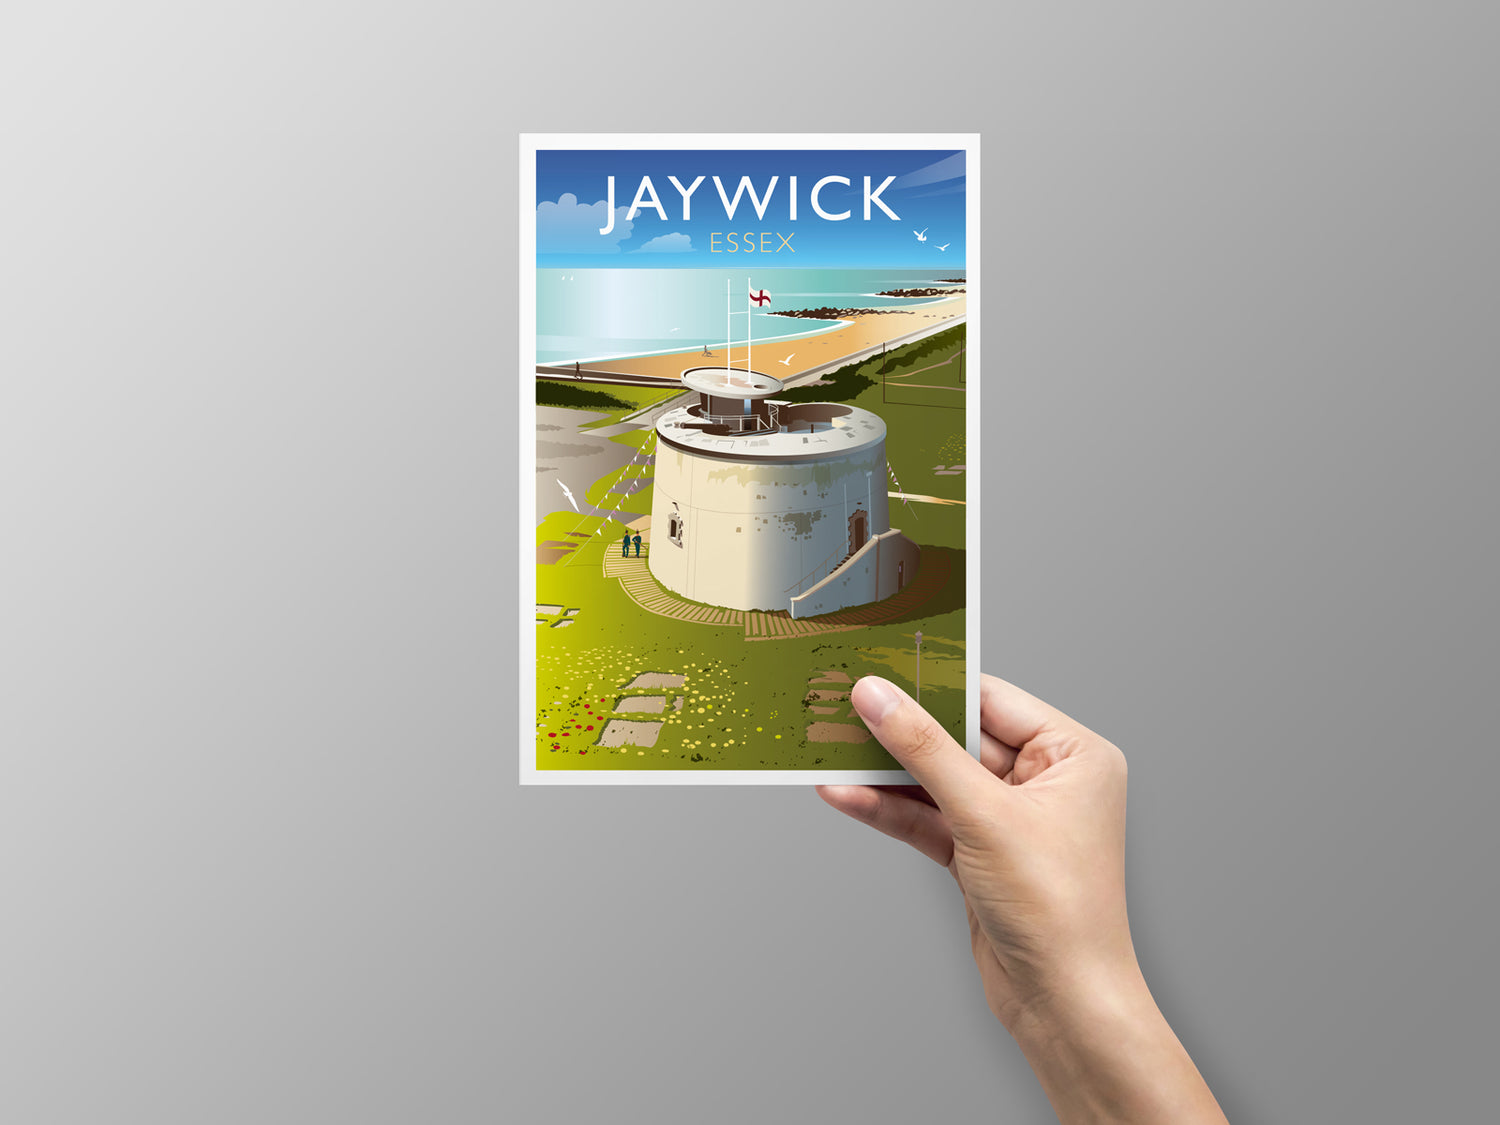 Jaywick, Essex Greeting Card